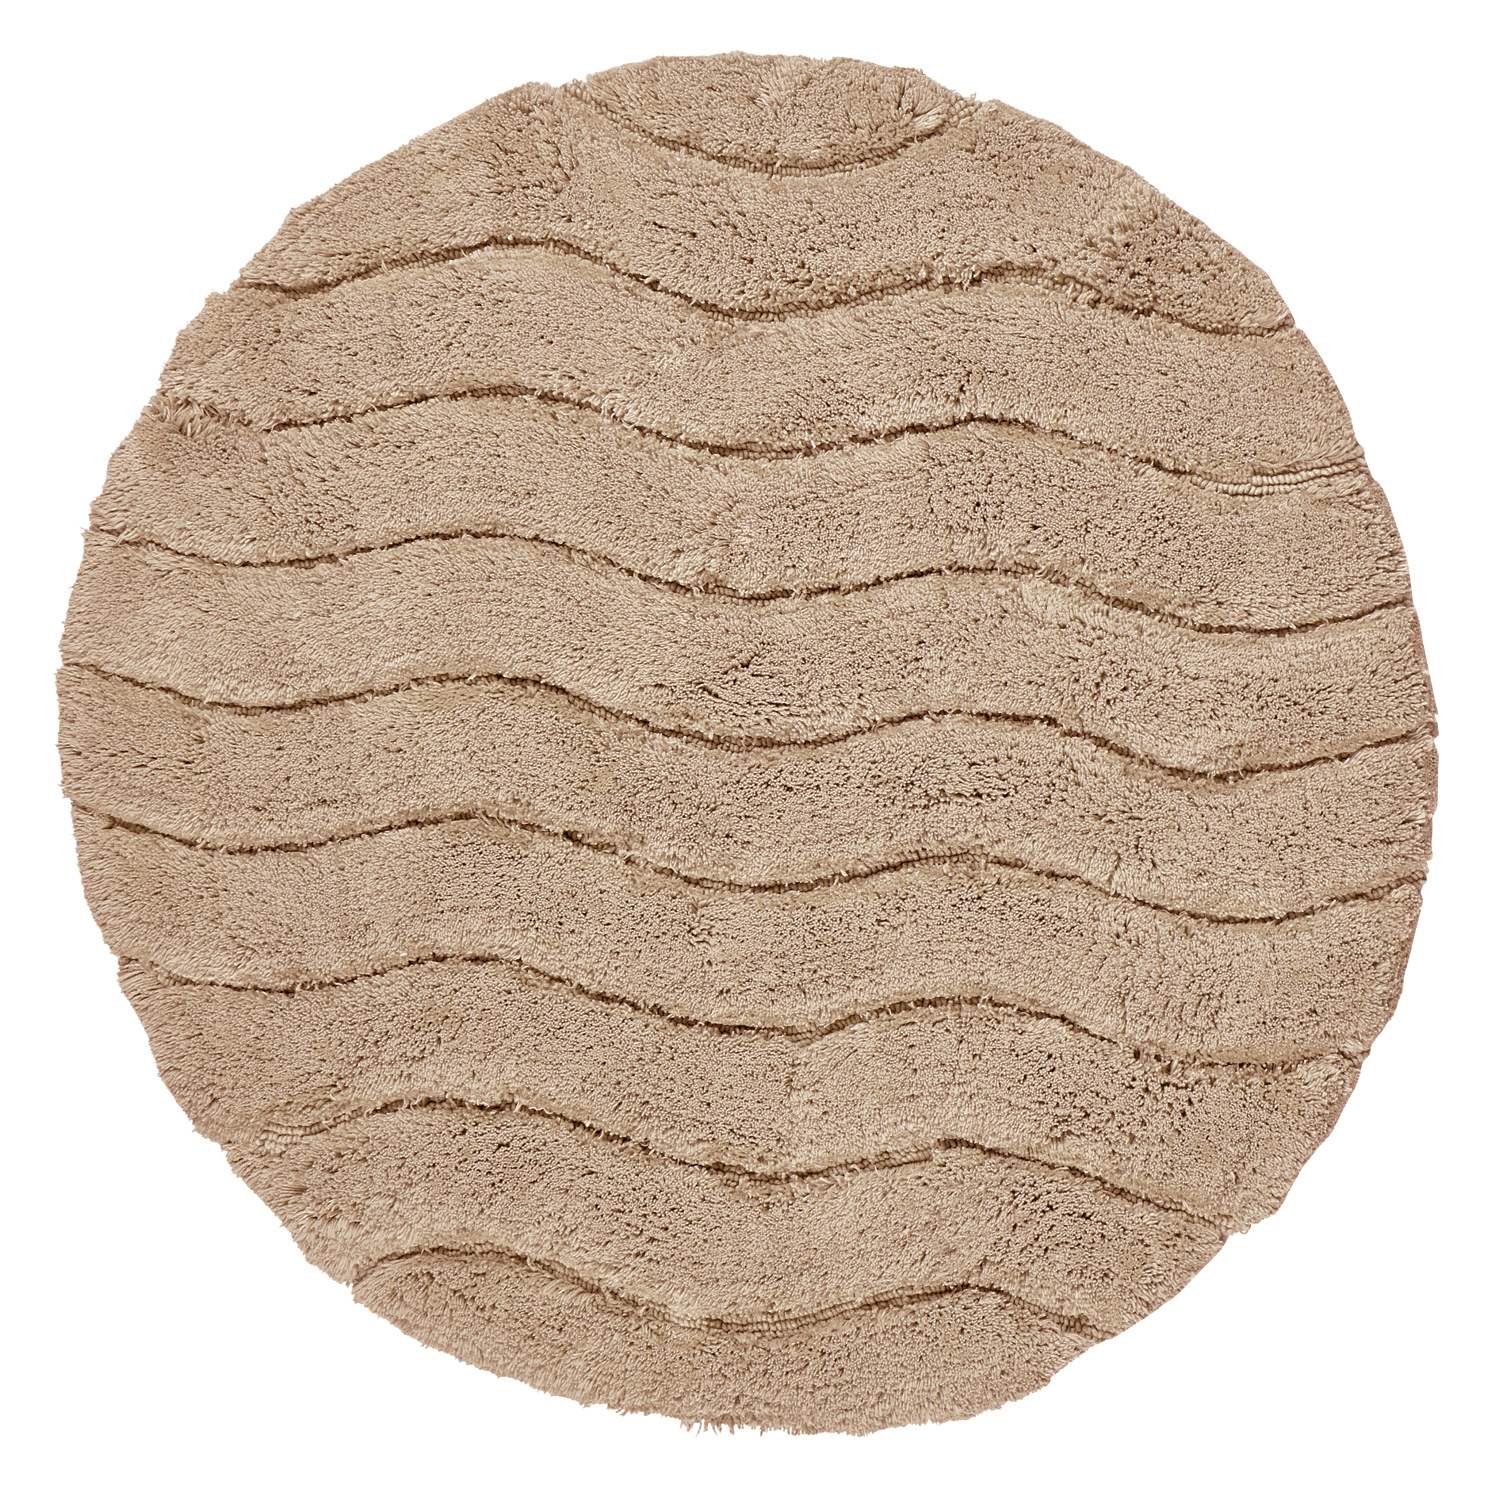 Better Trends Indulgence 100% Cotton 30" Round Bath Rug - Sand - image 2 of 5